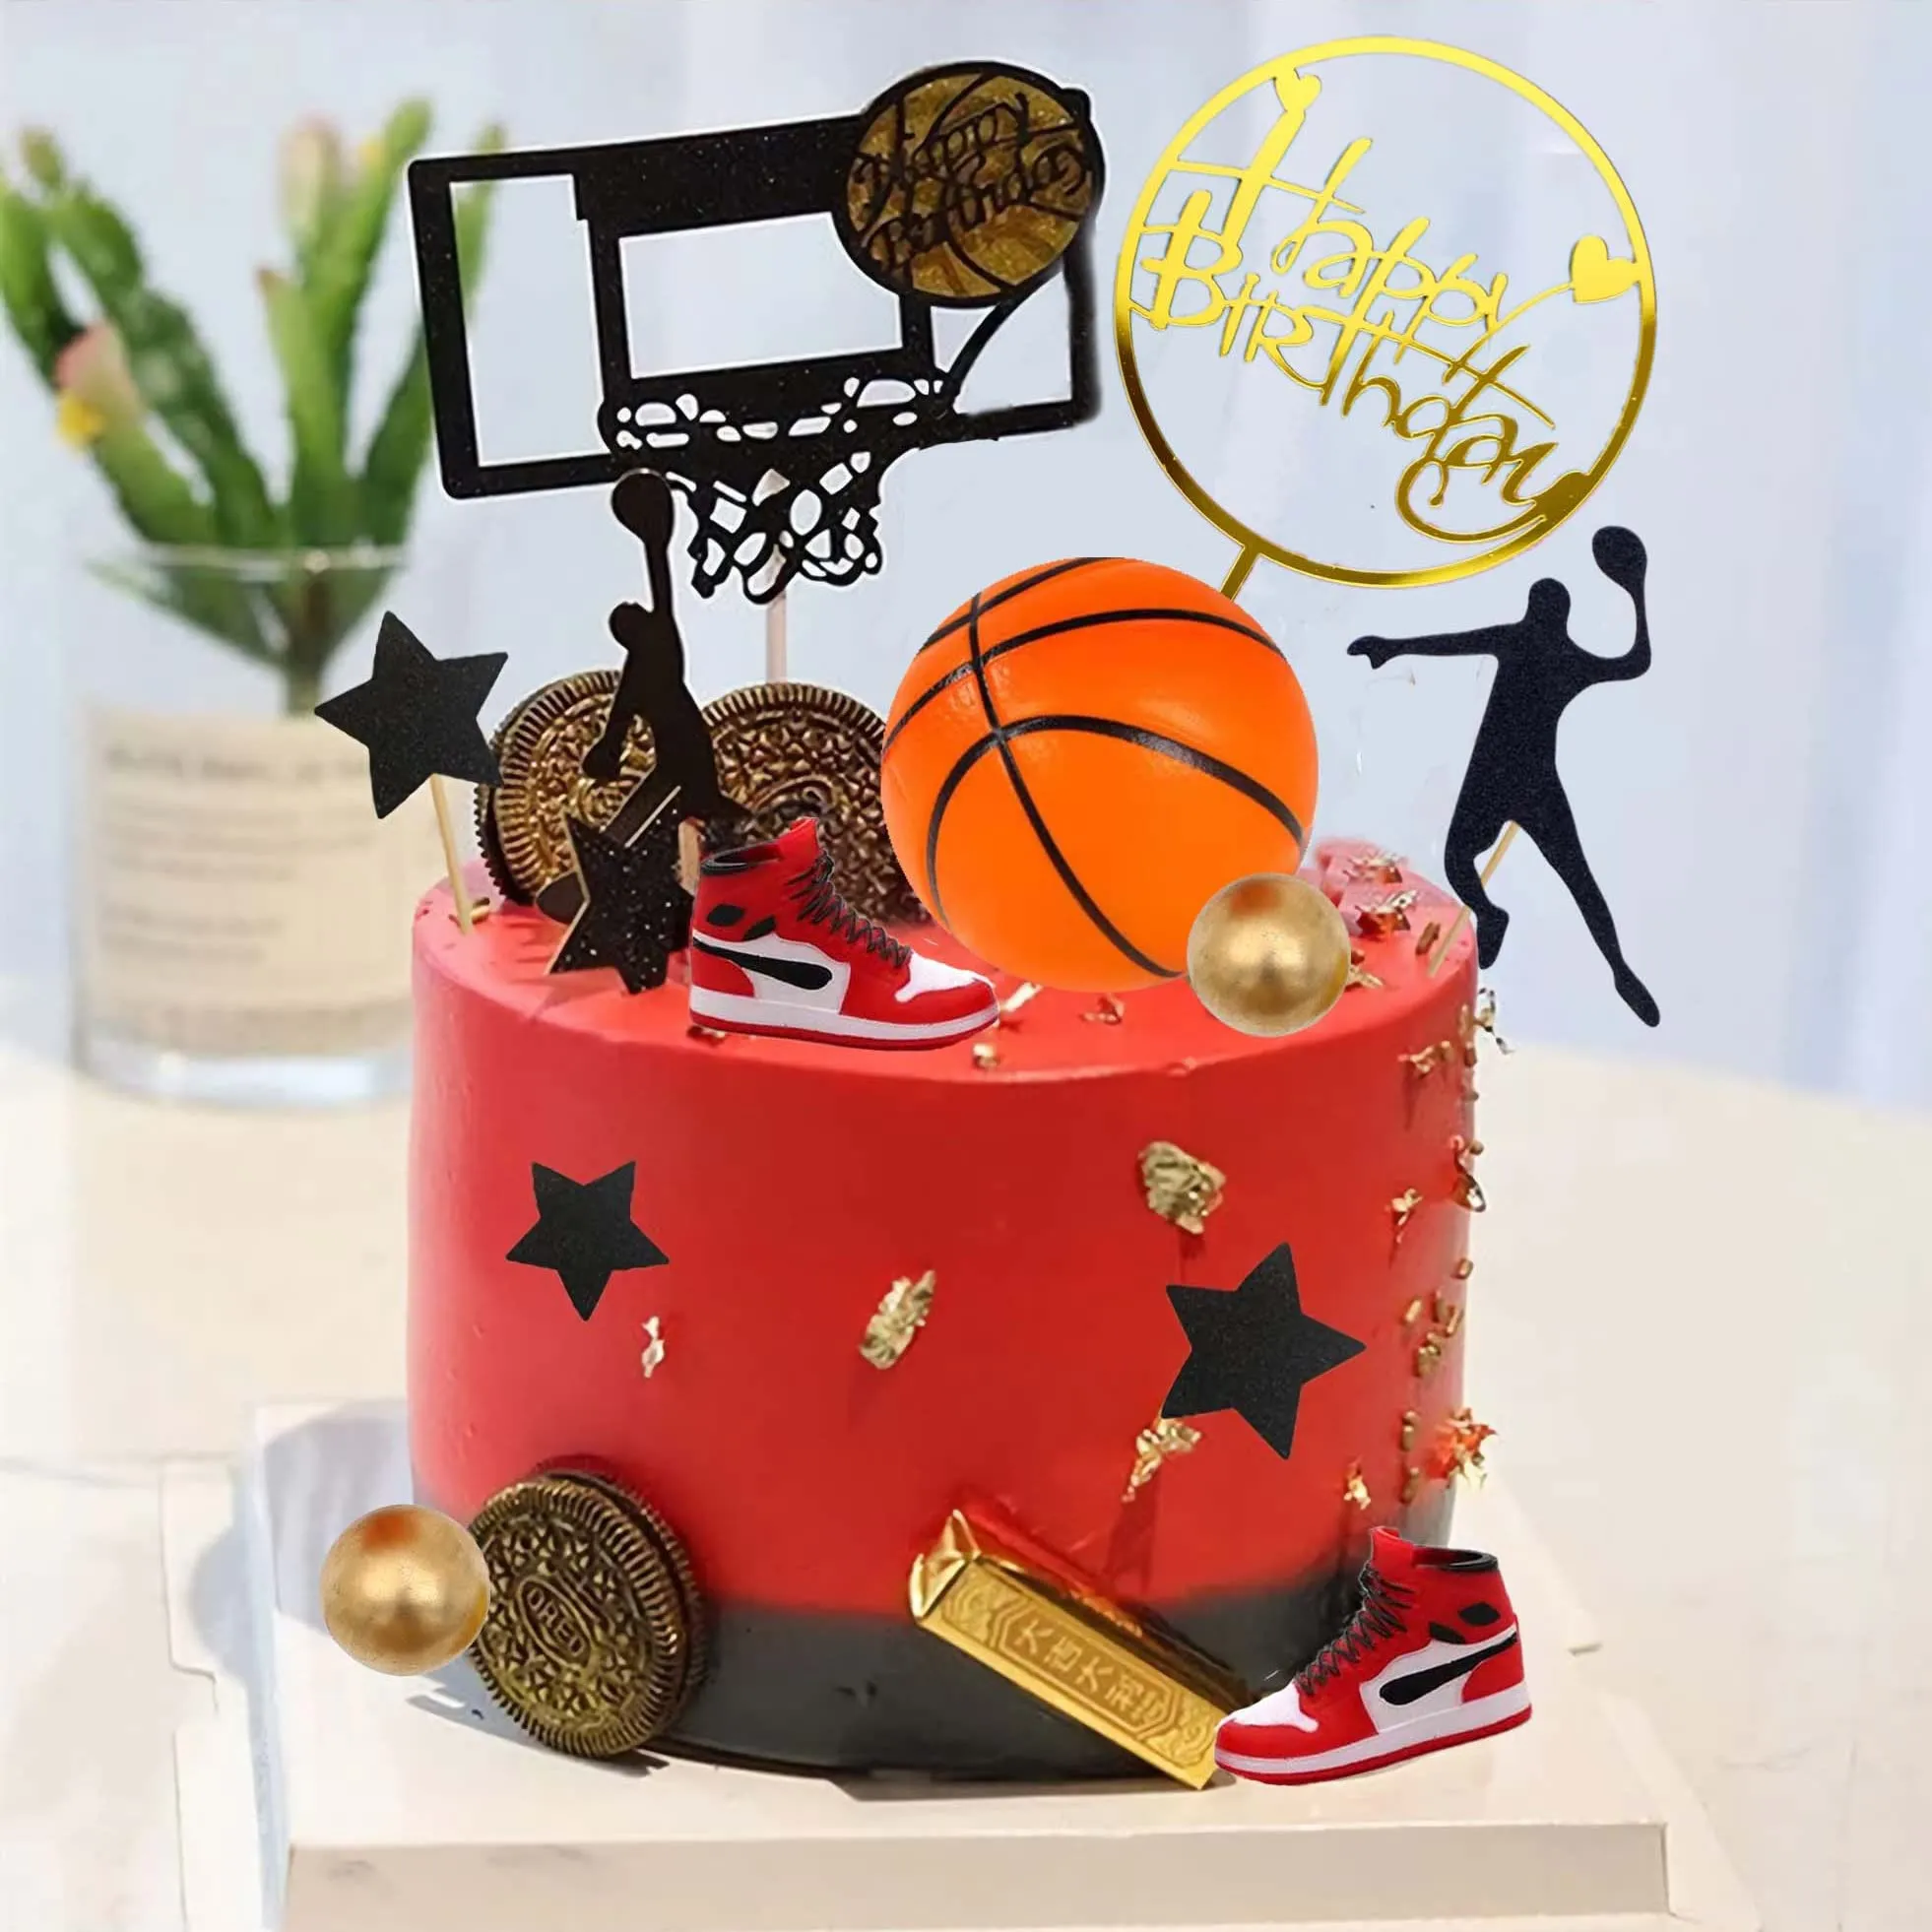 3ml birthday boy cake topper basketball signs happy basketball player birthday cake picks decorations for sport theme man boys birthday party supplies